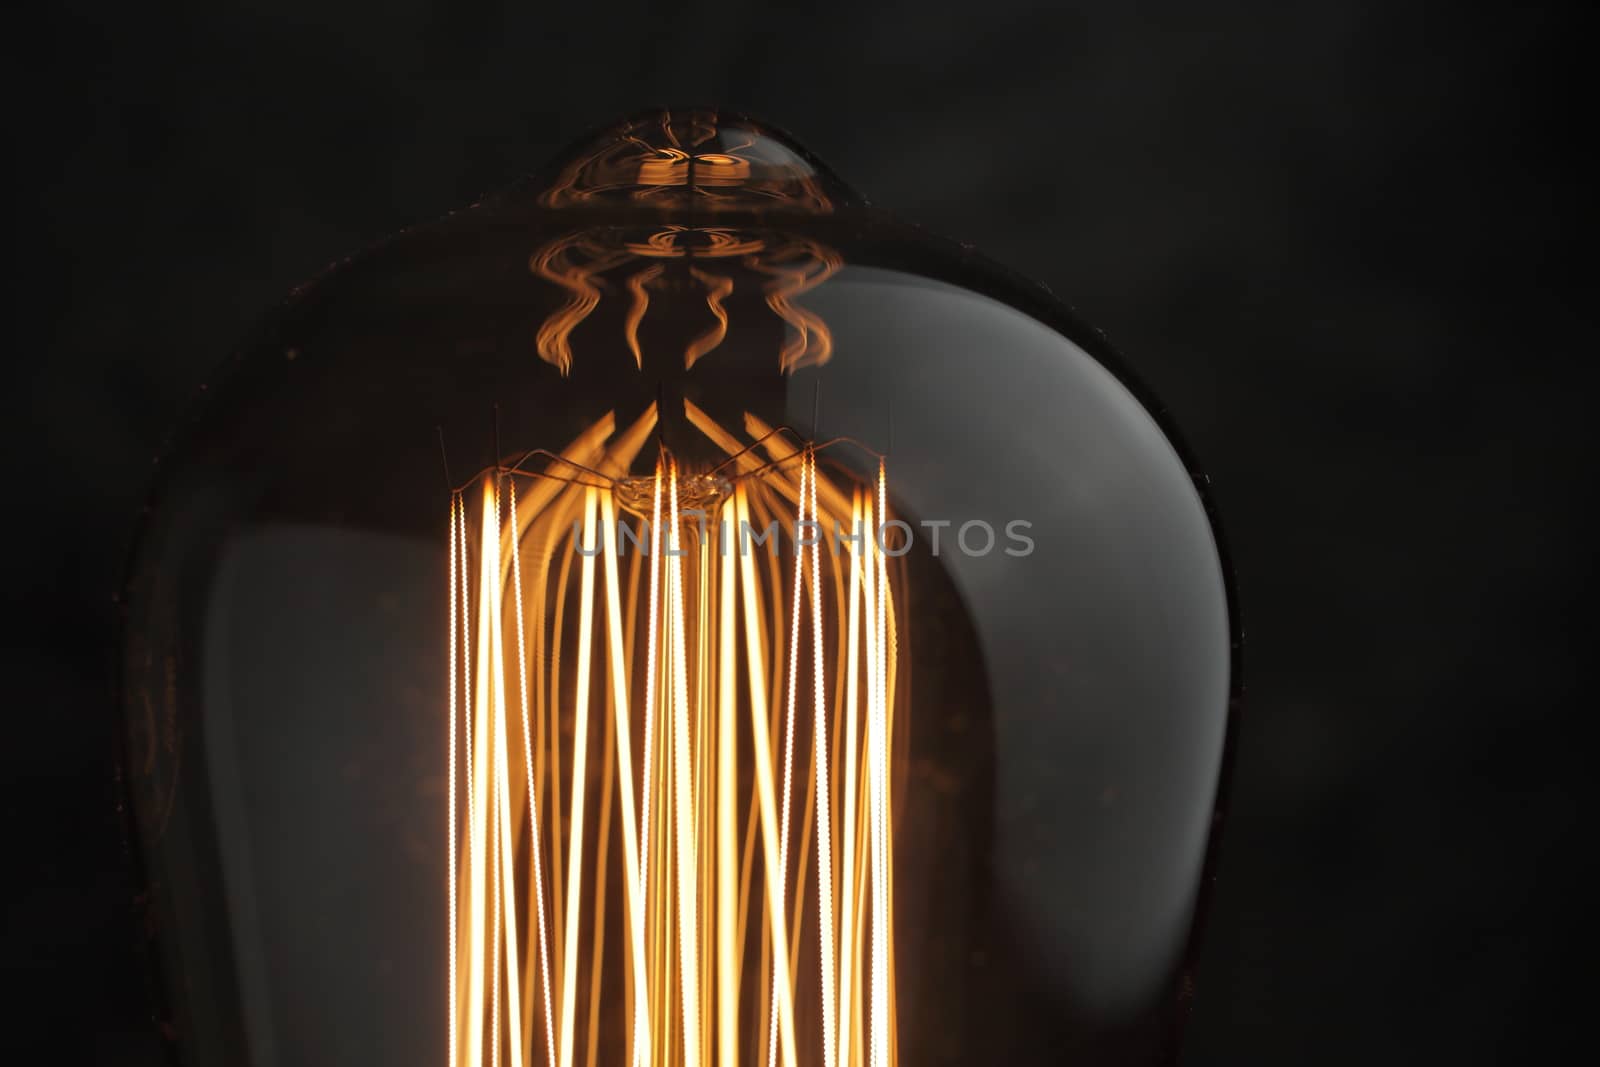 Edison retro lamp close-up. A good idea by selinsmo